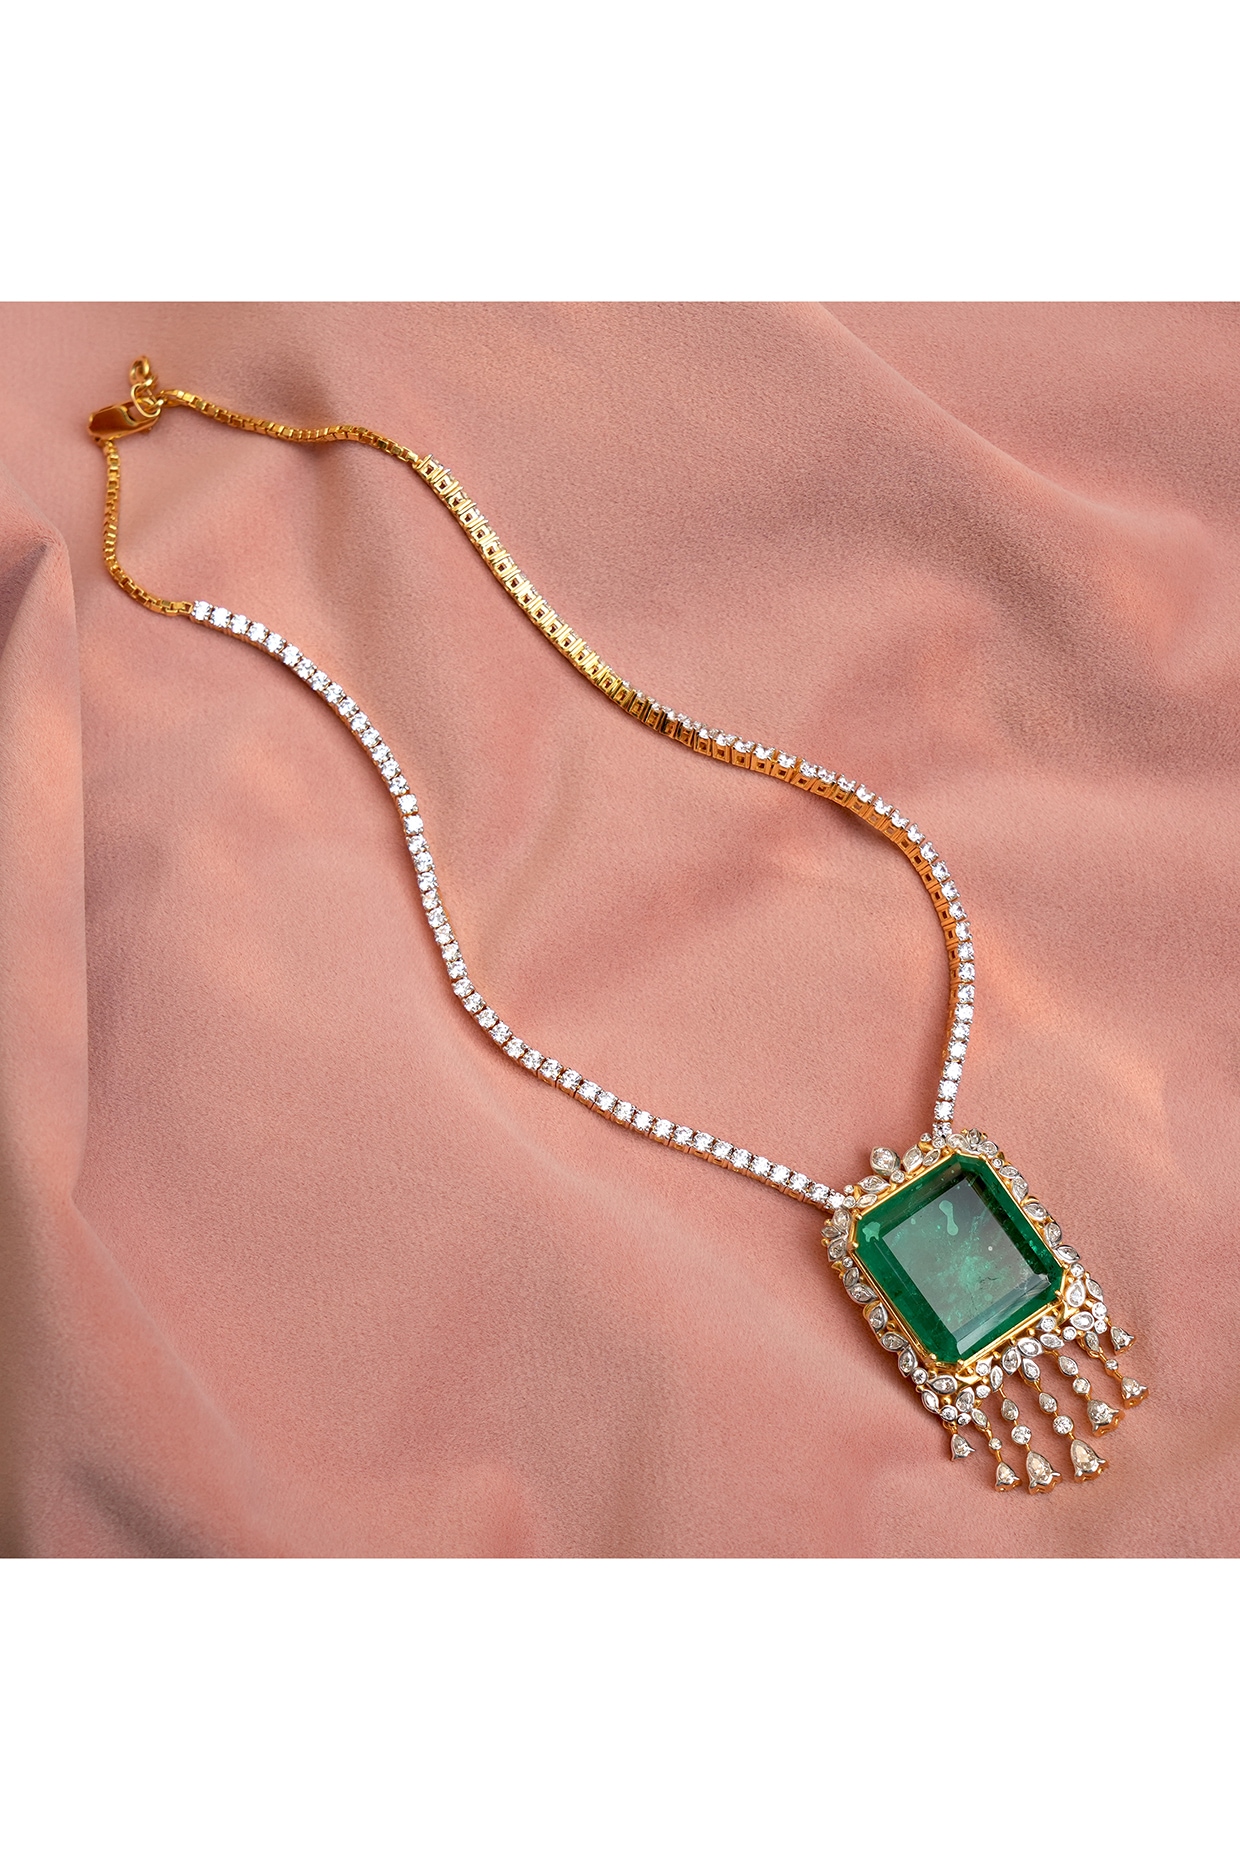 Green Emerald 4mm Square Cut Gemstone Pendant 14k Real Gold Pendant